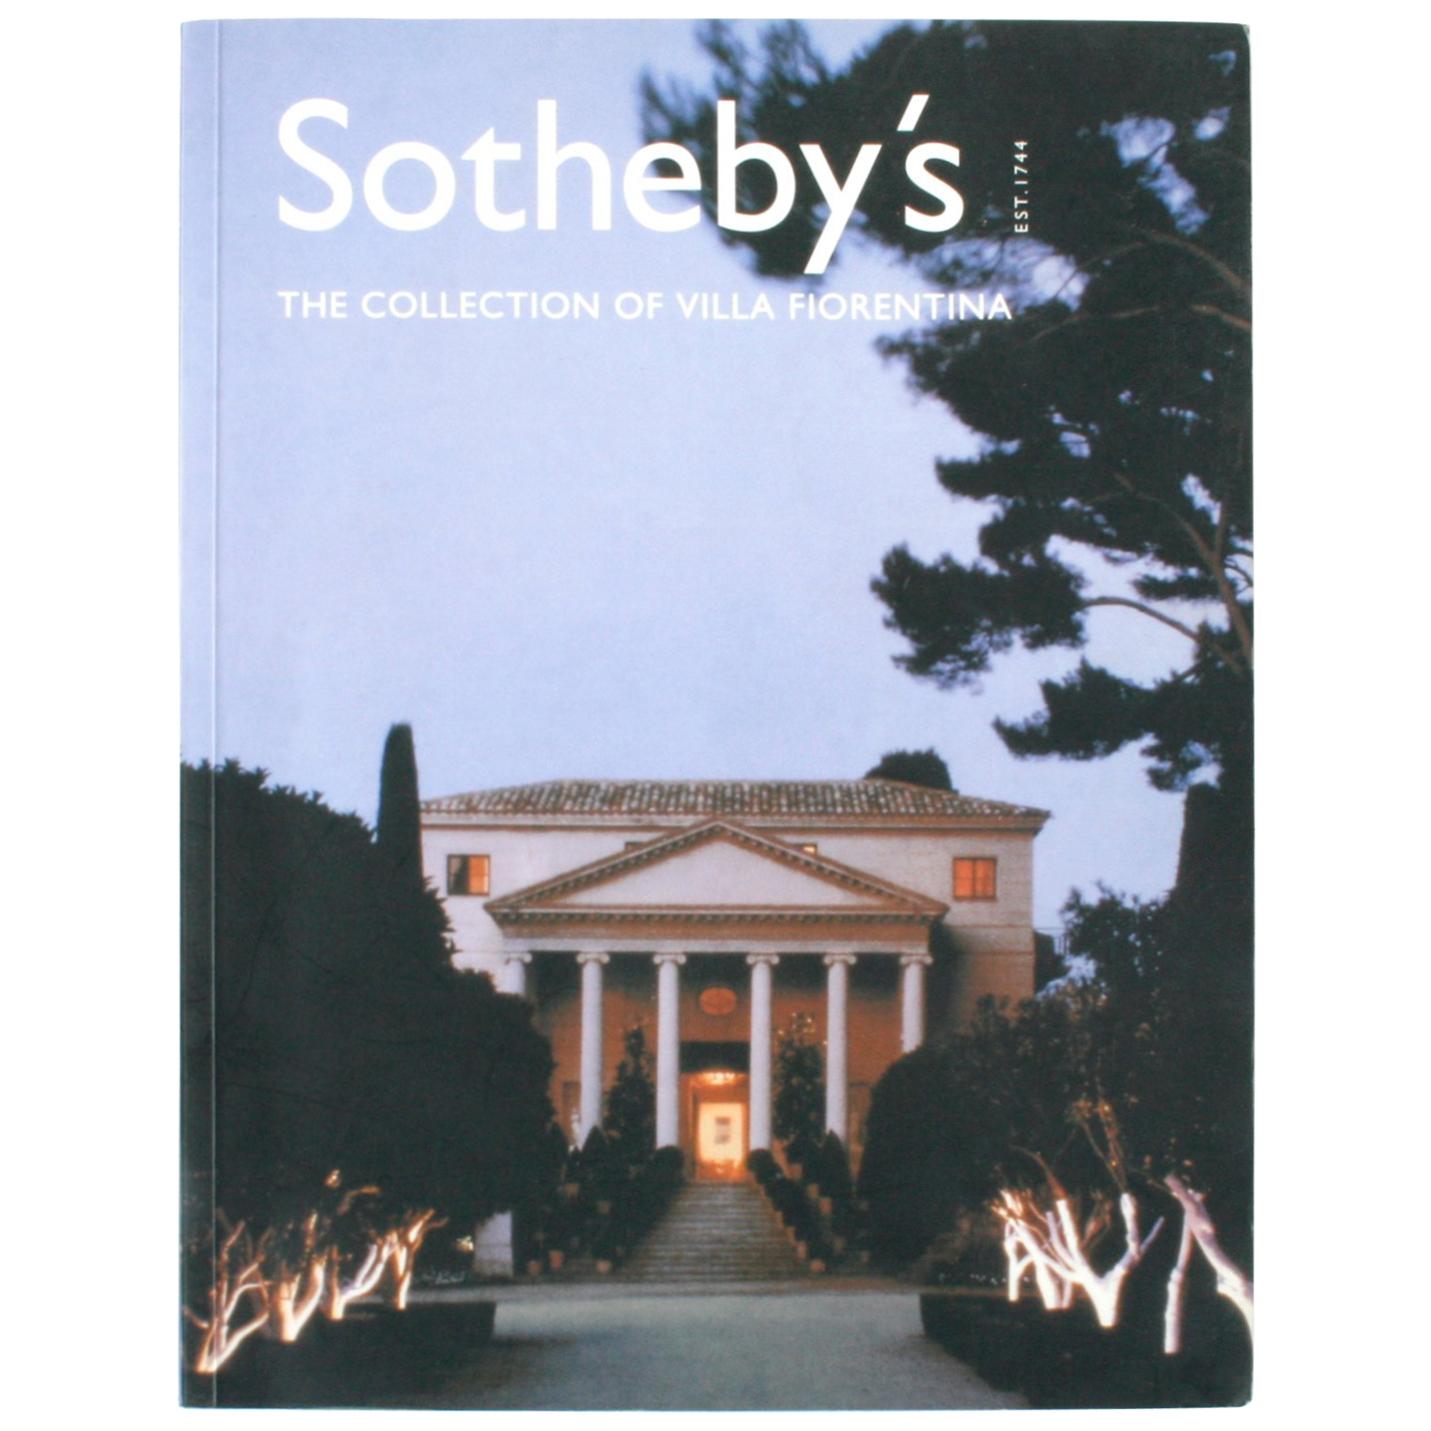 Sotheby's, The Collection of Villa Fiorentina